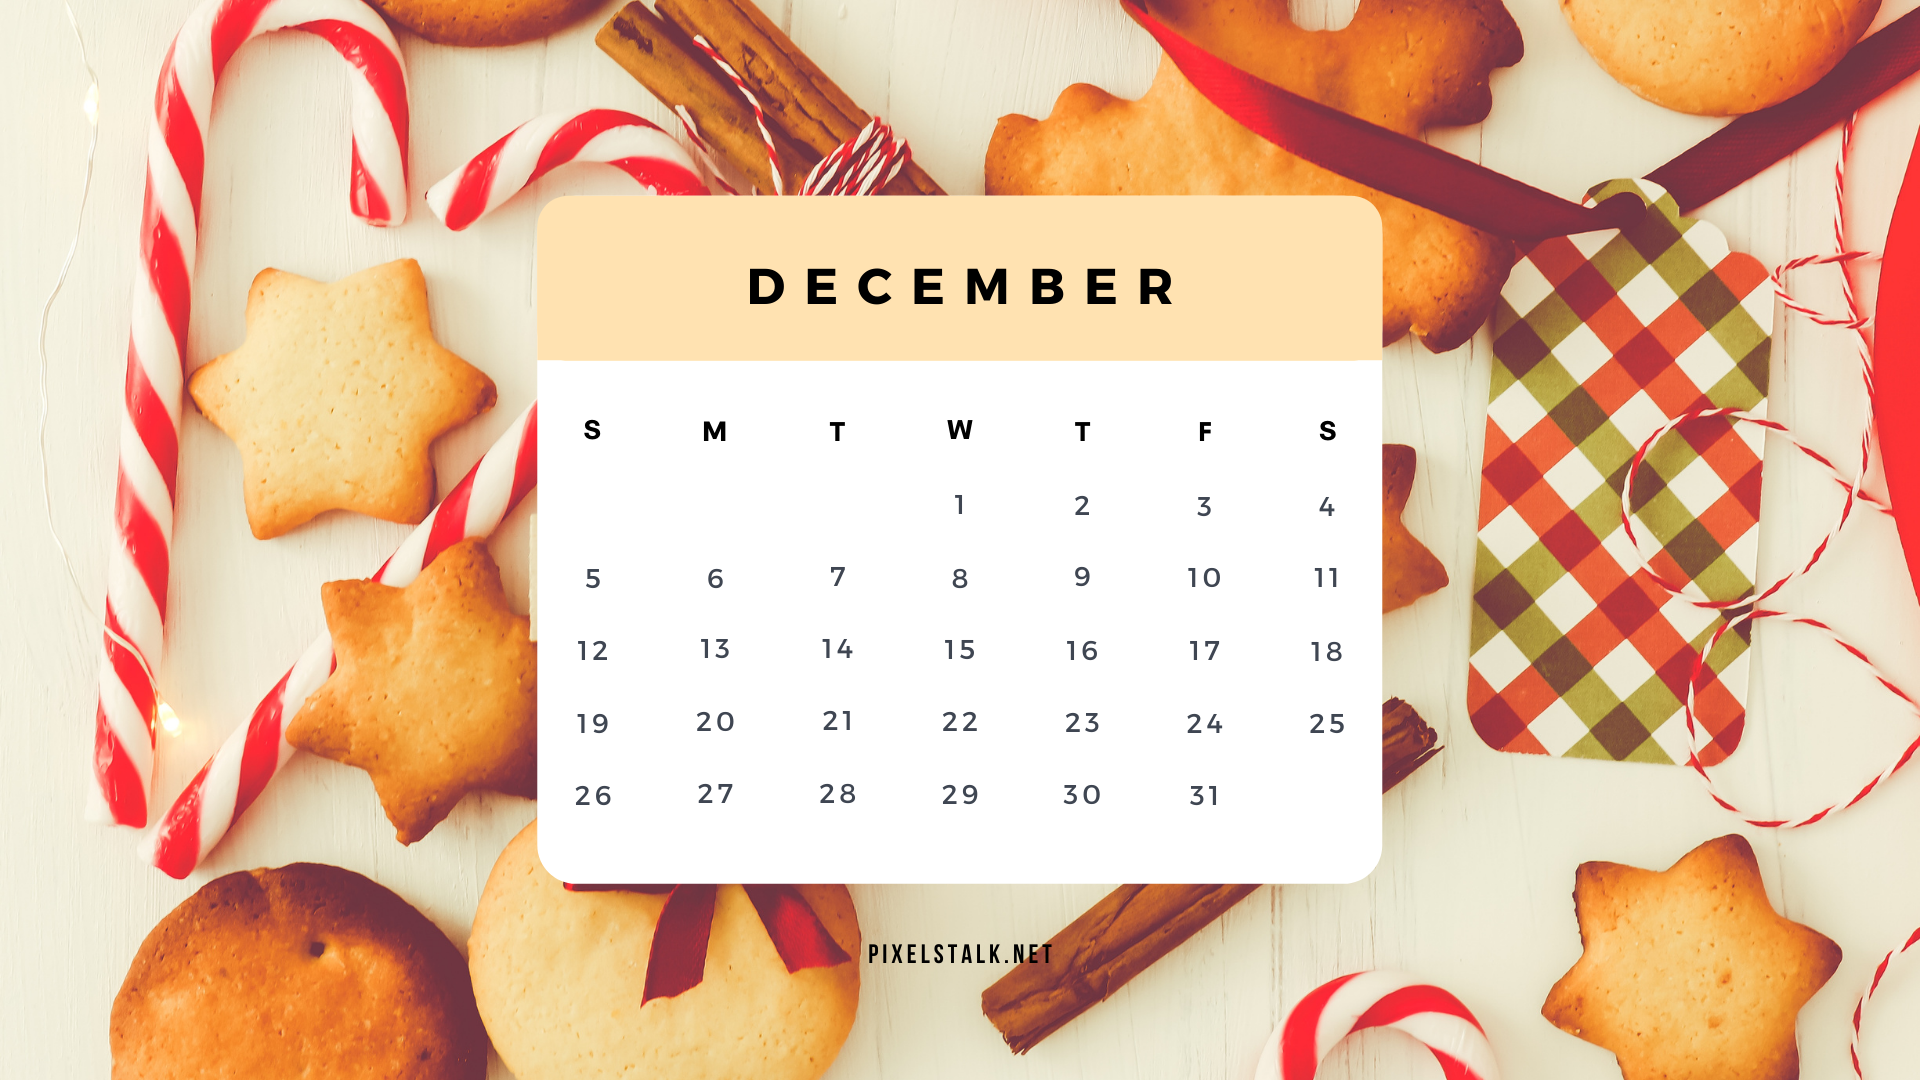 December 2021 Calendar Wallpaper (Desktop and Mobile version)